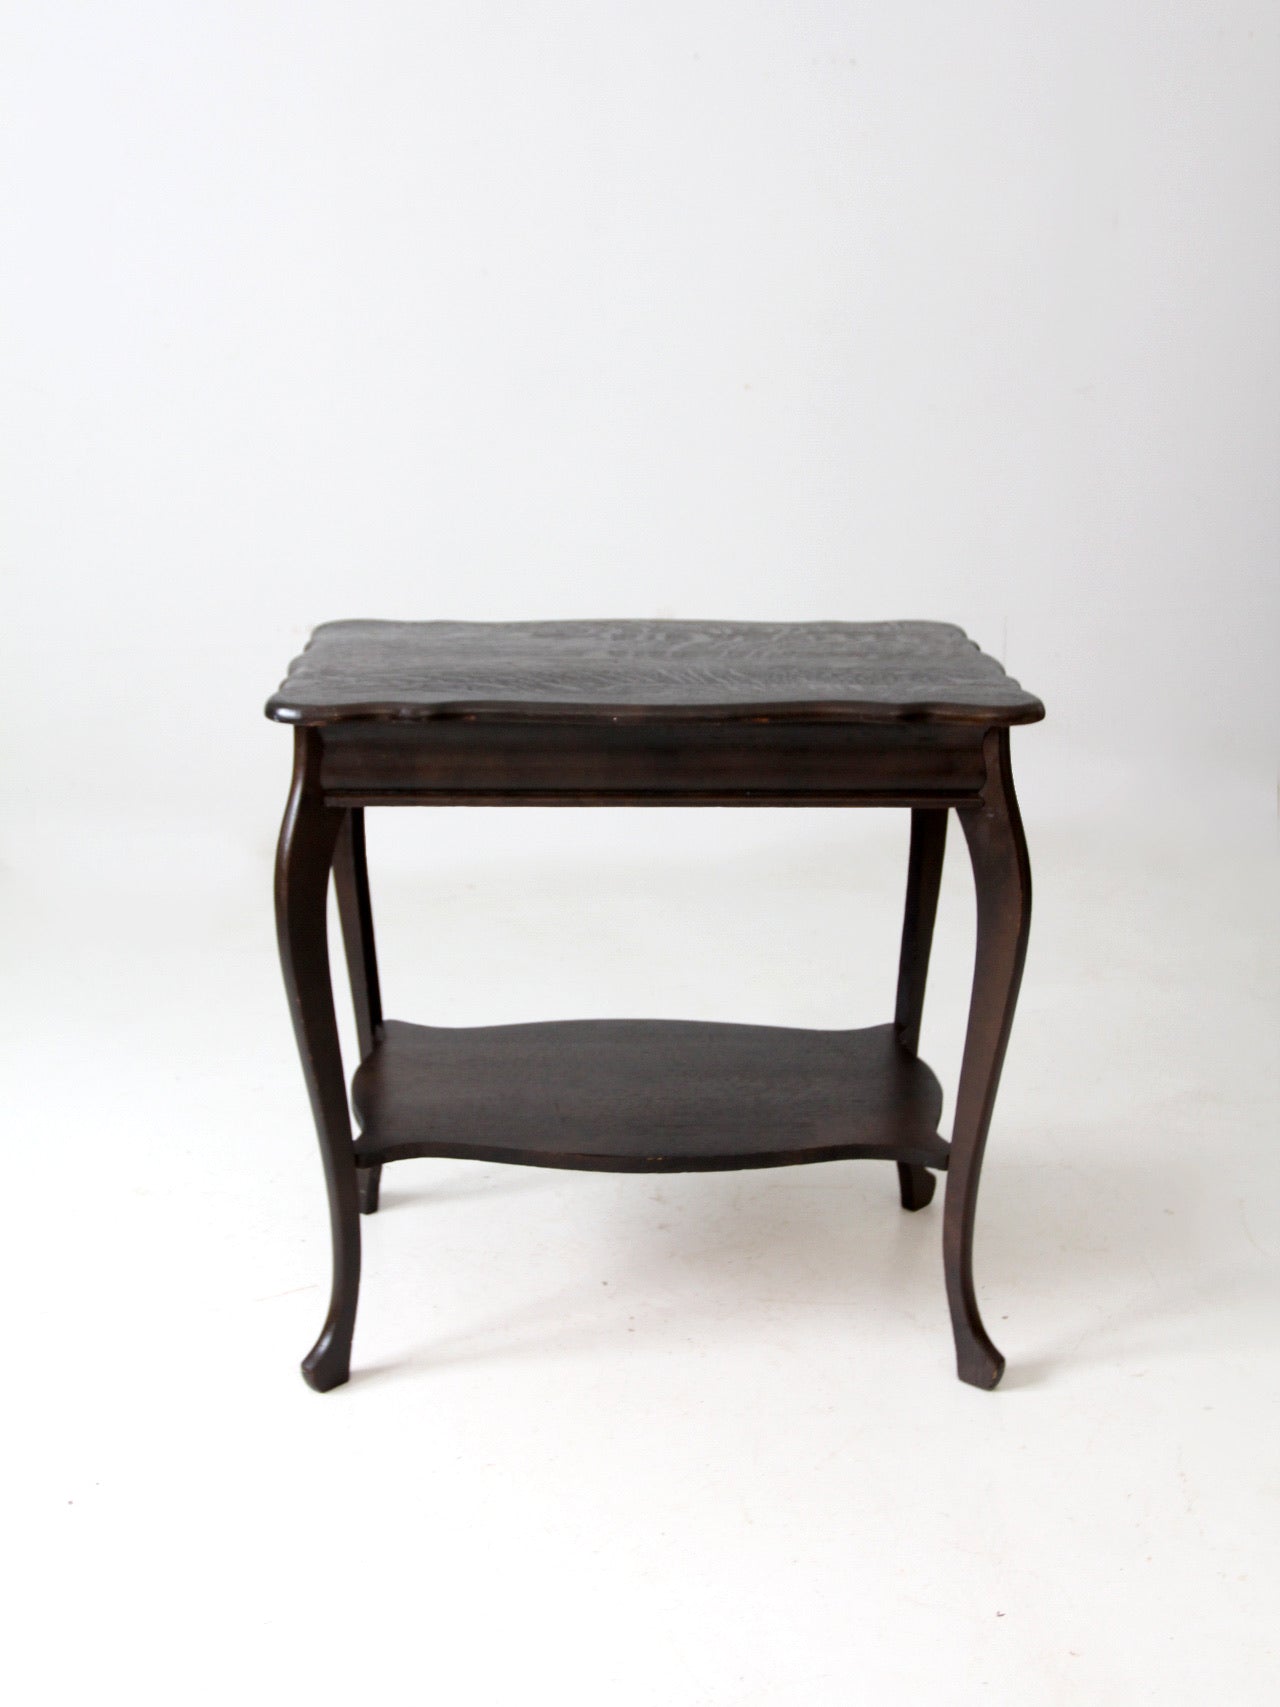 antique wood parlor table